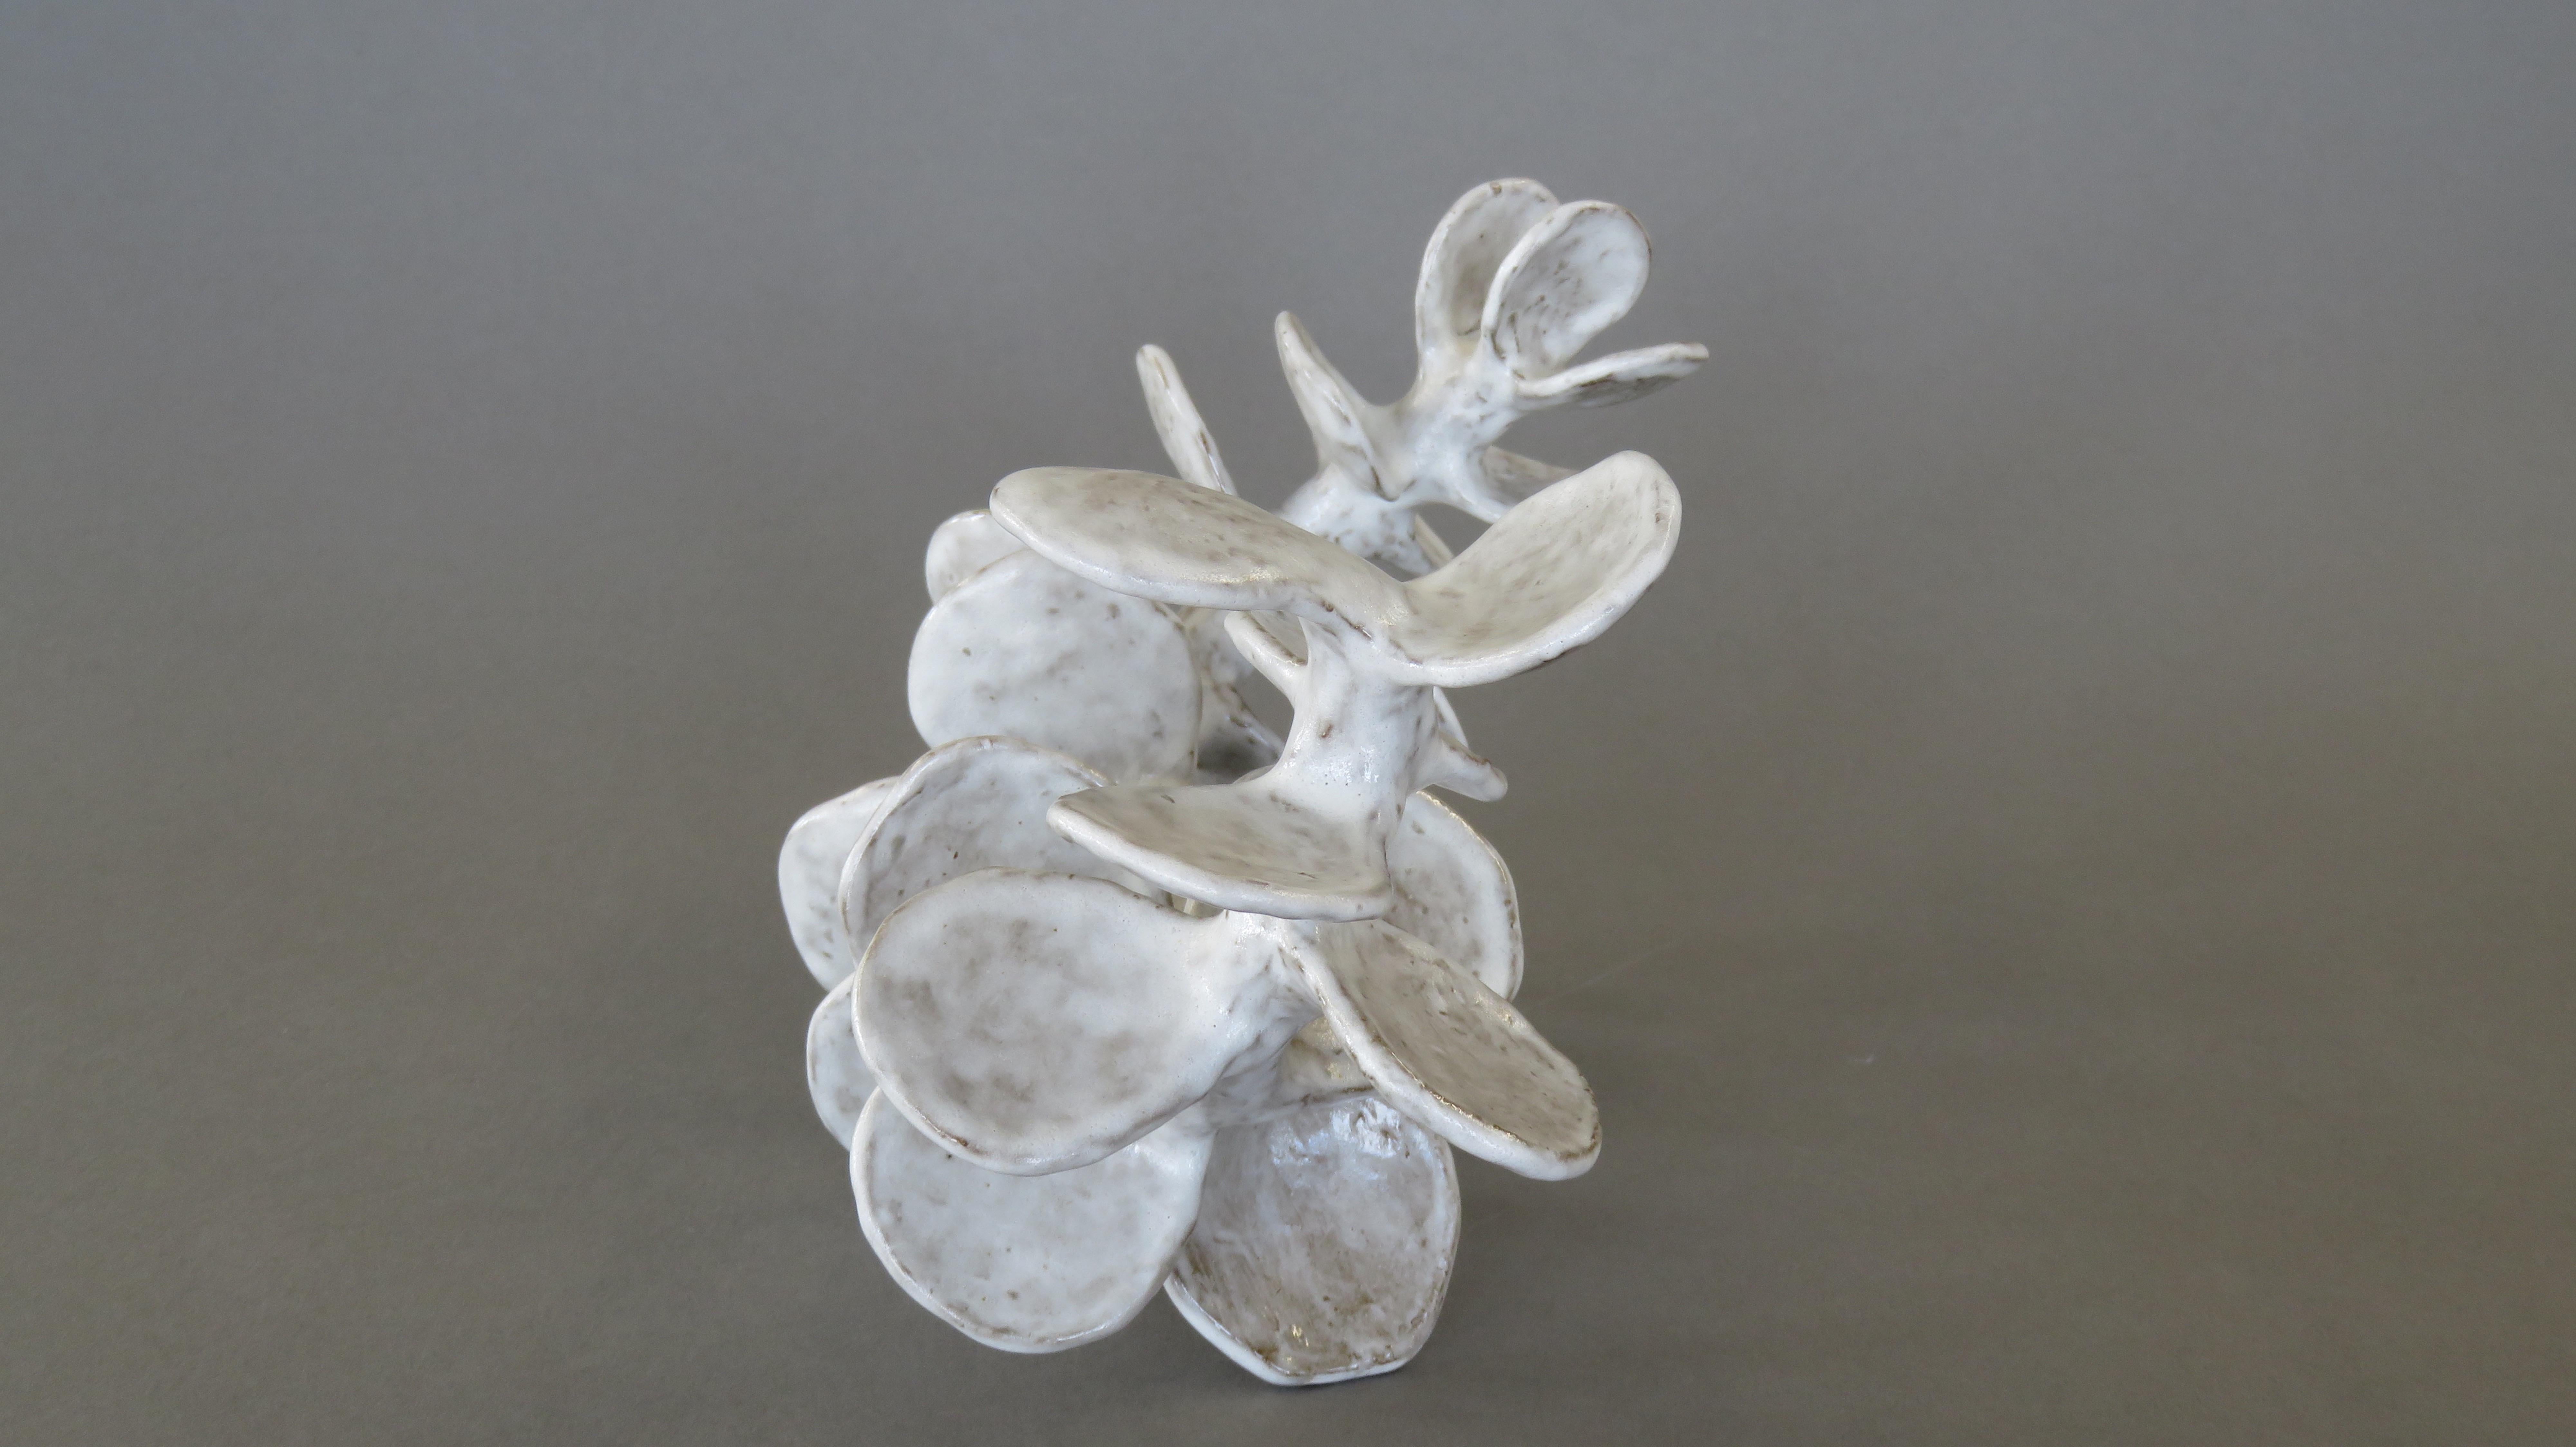 Handgefertigte Keramik-Skulptur:: Liegende Skelett-Wirbelsäule in gesprenkeltem Weiß 3